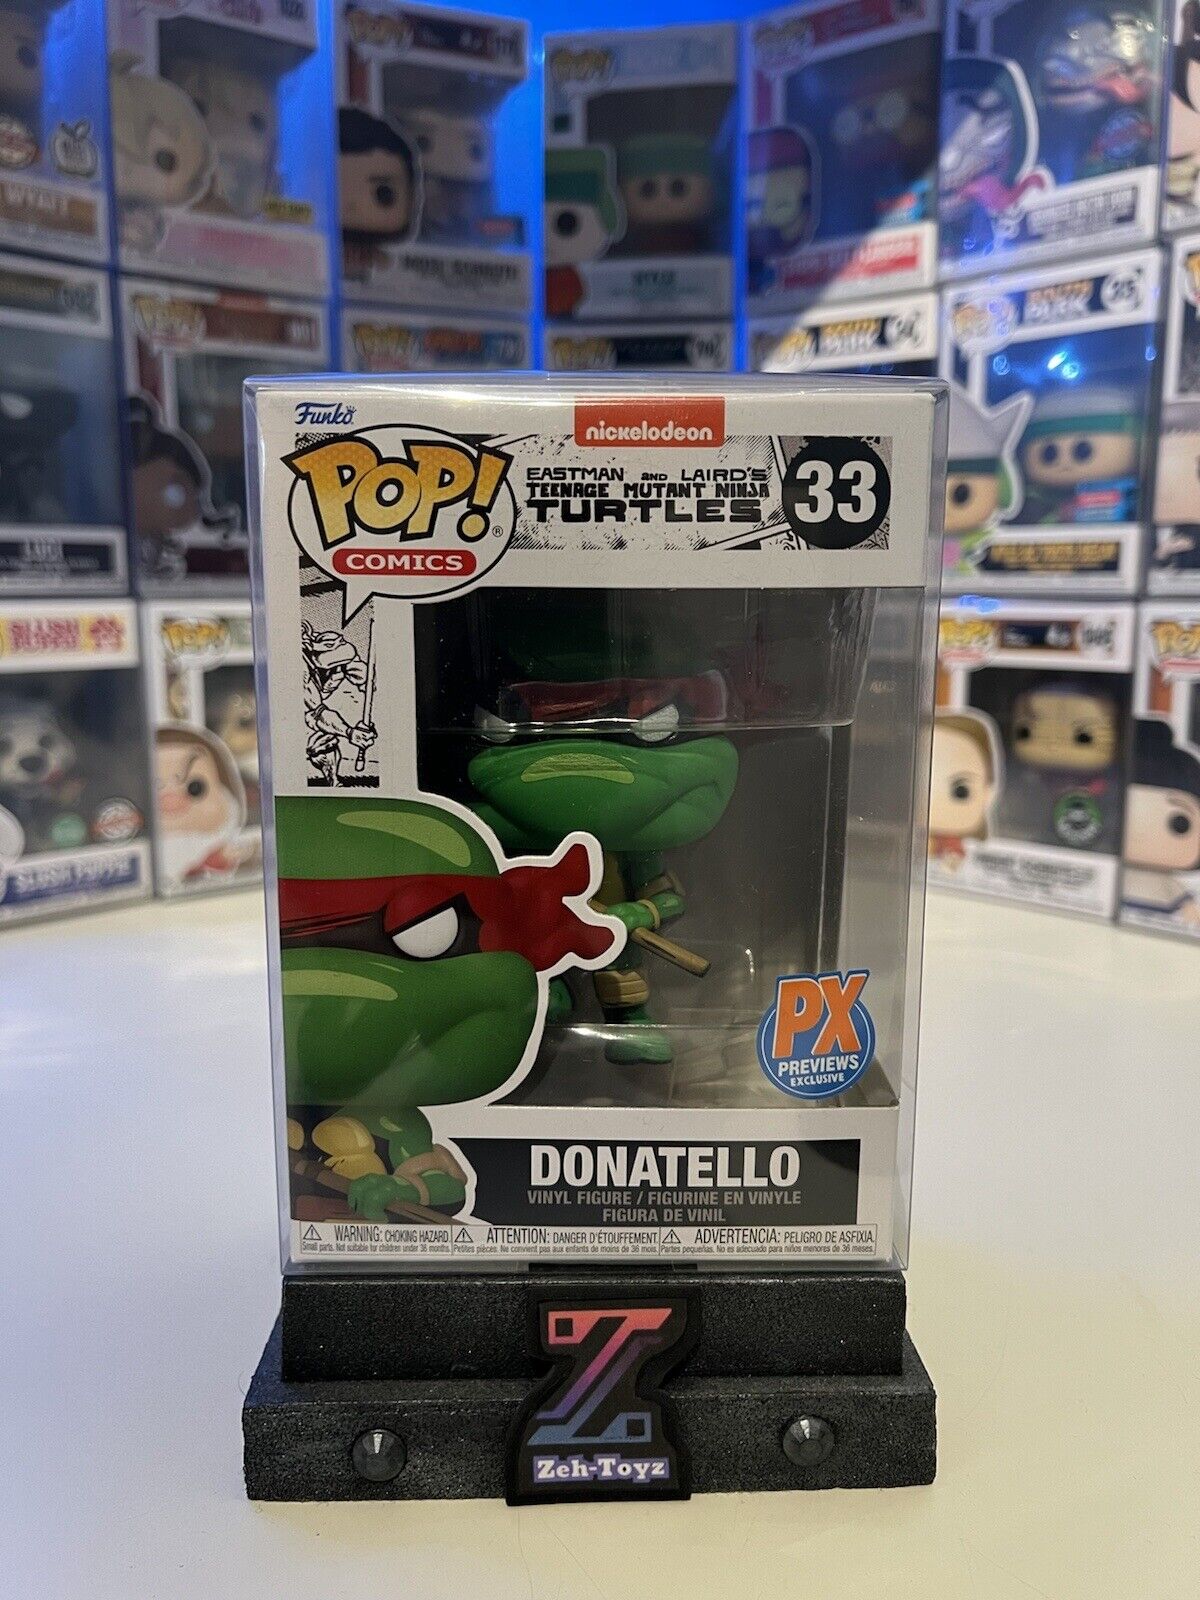 Buy Pop! Donatello at Funko.